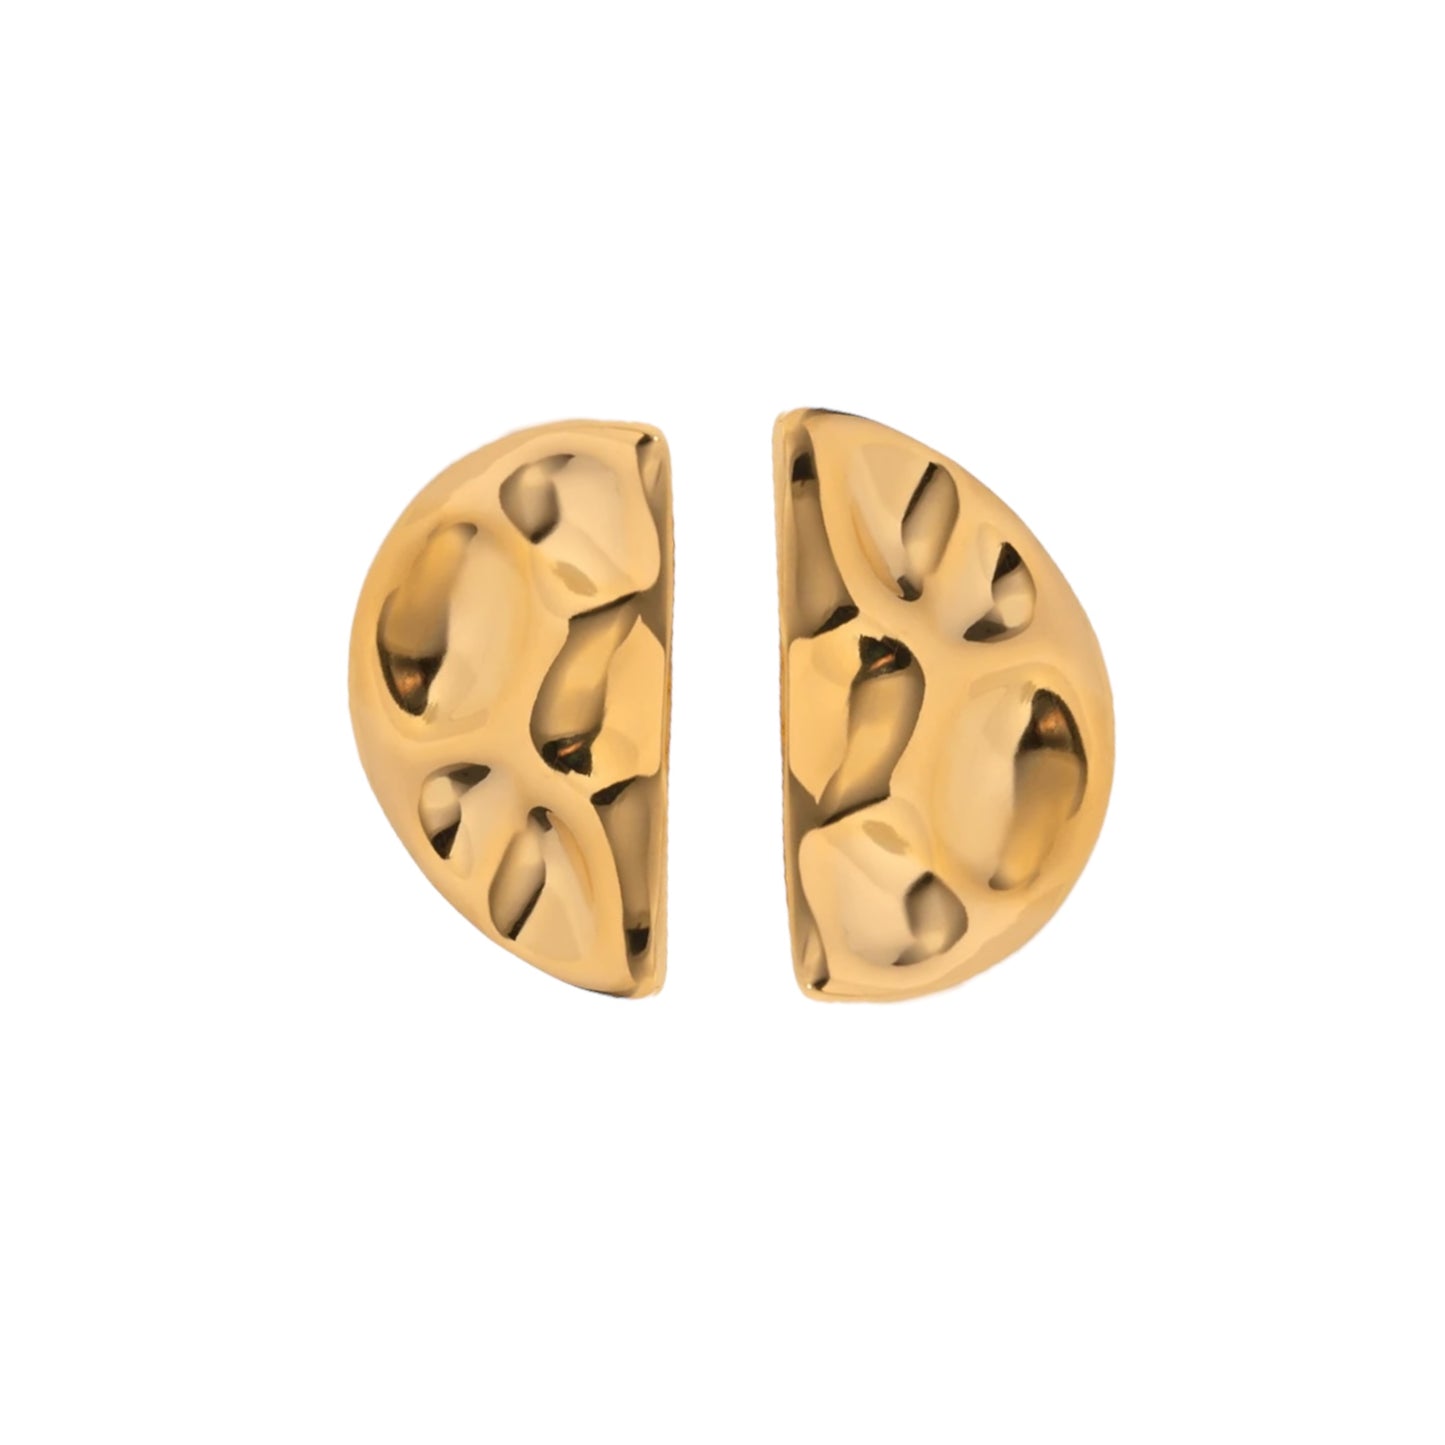 Golden Matisse earrings